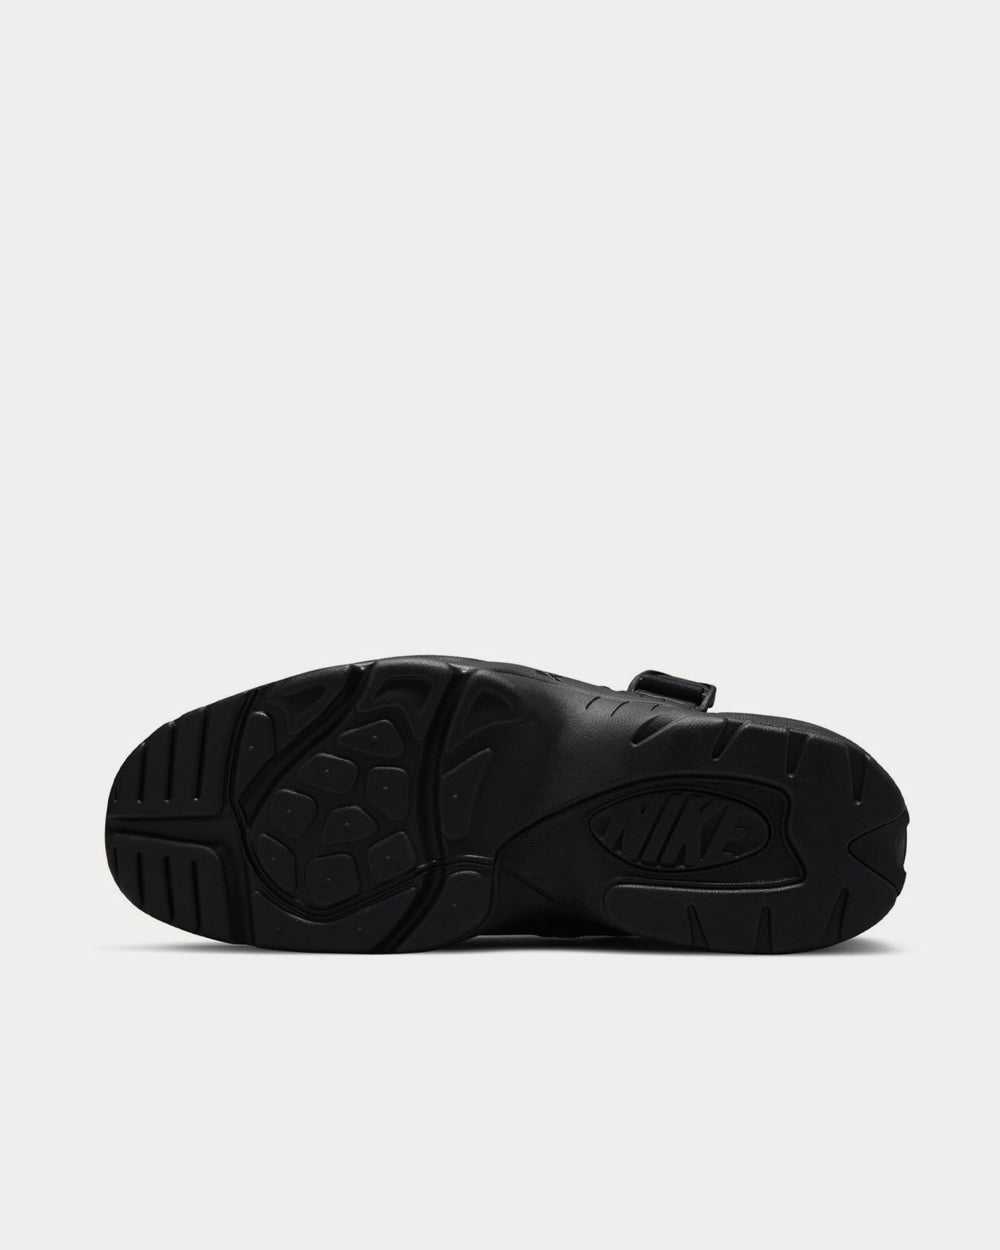 Nike x Comme des Garçons - Air Carnivore Black High Top Sneakers